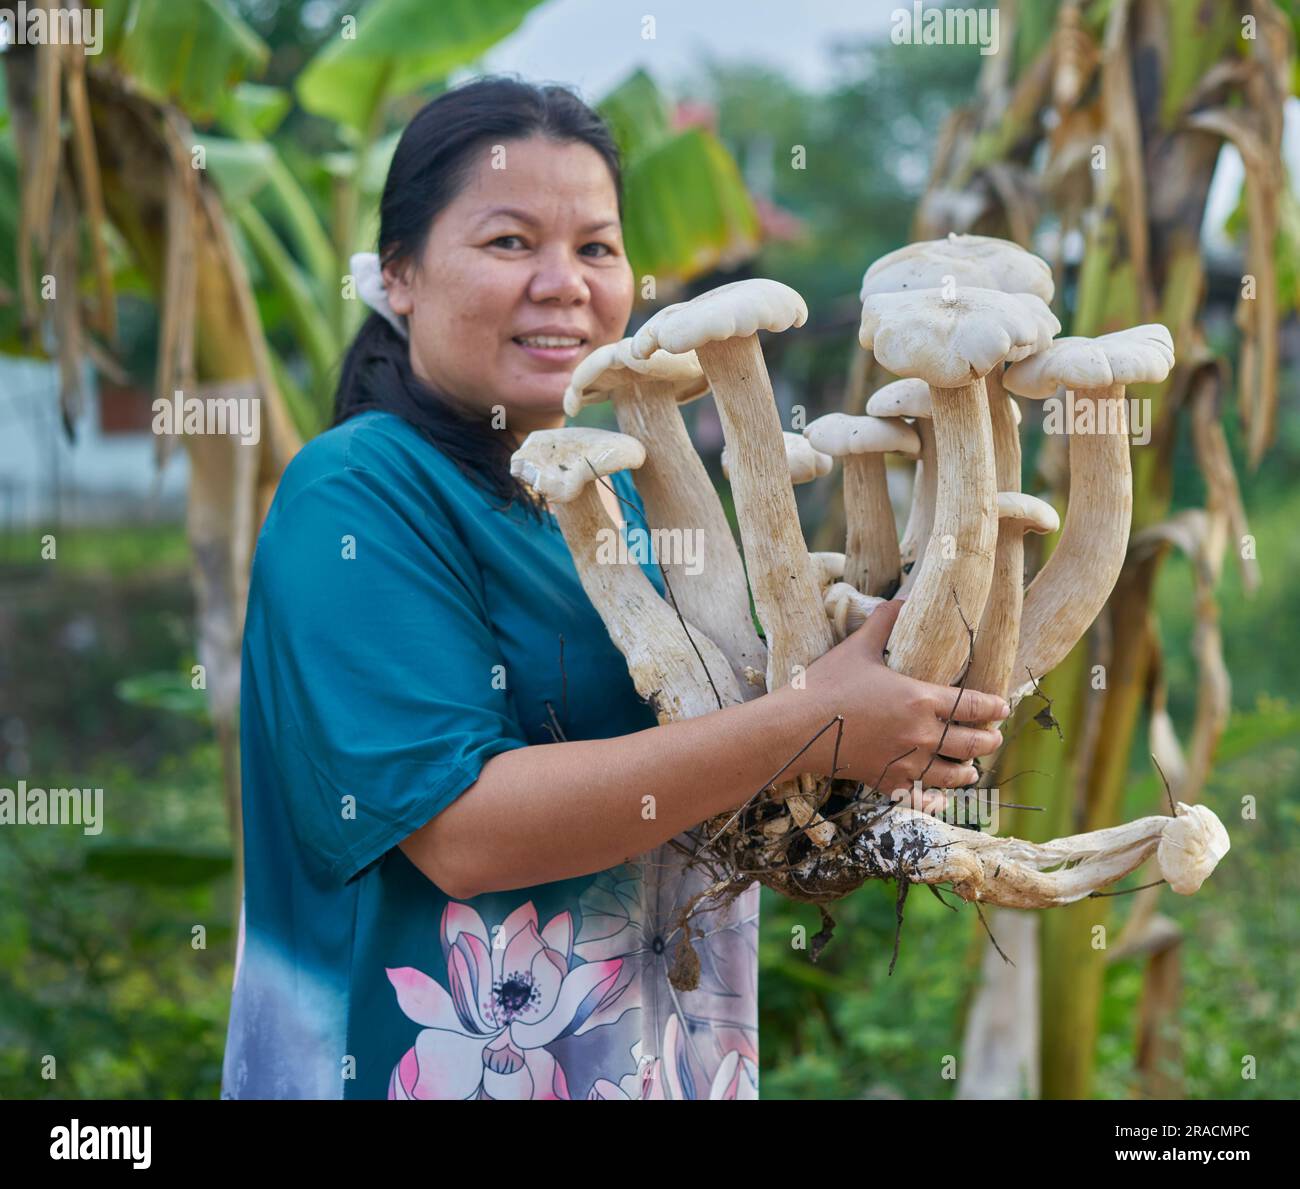 A lady holding giant wild mushrooms. Stock Photo